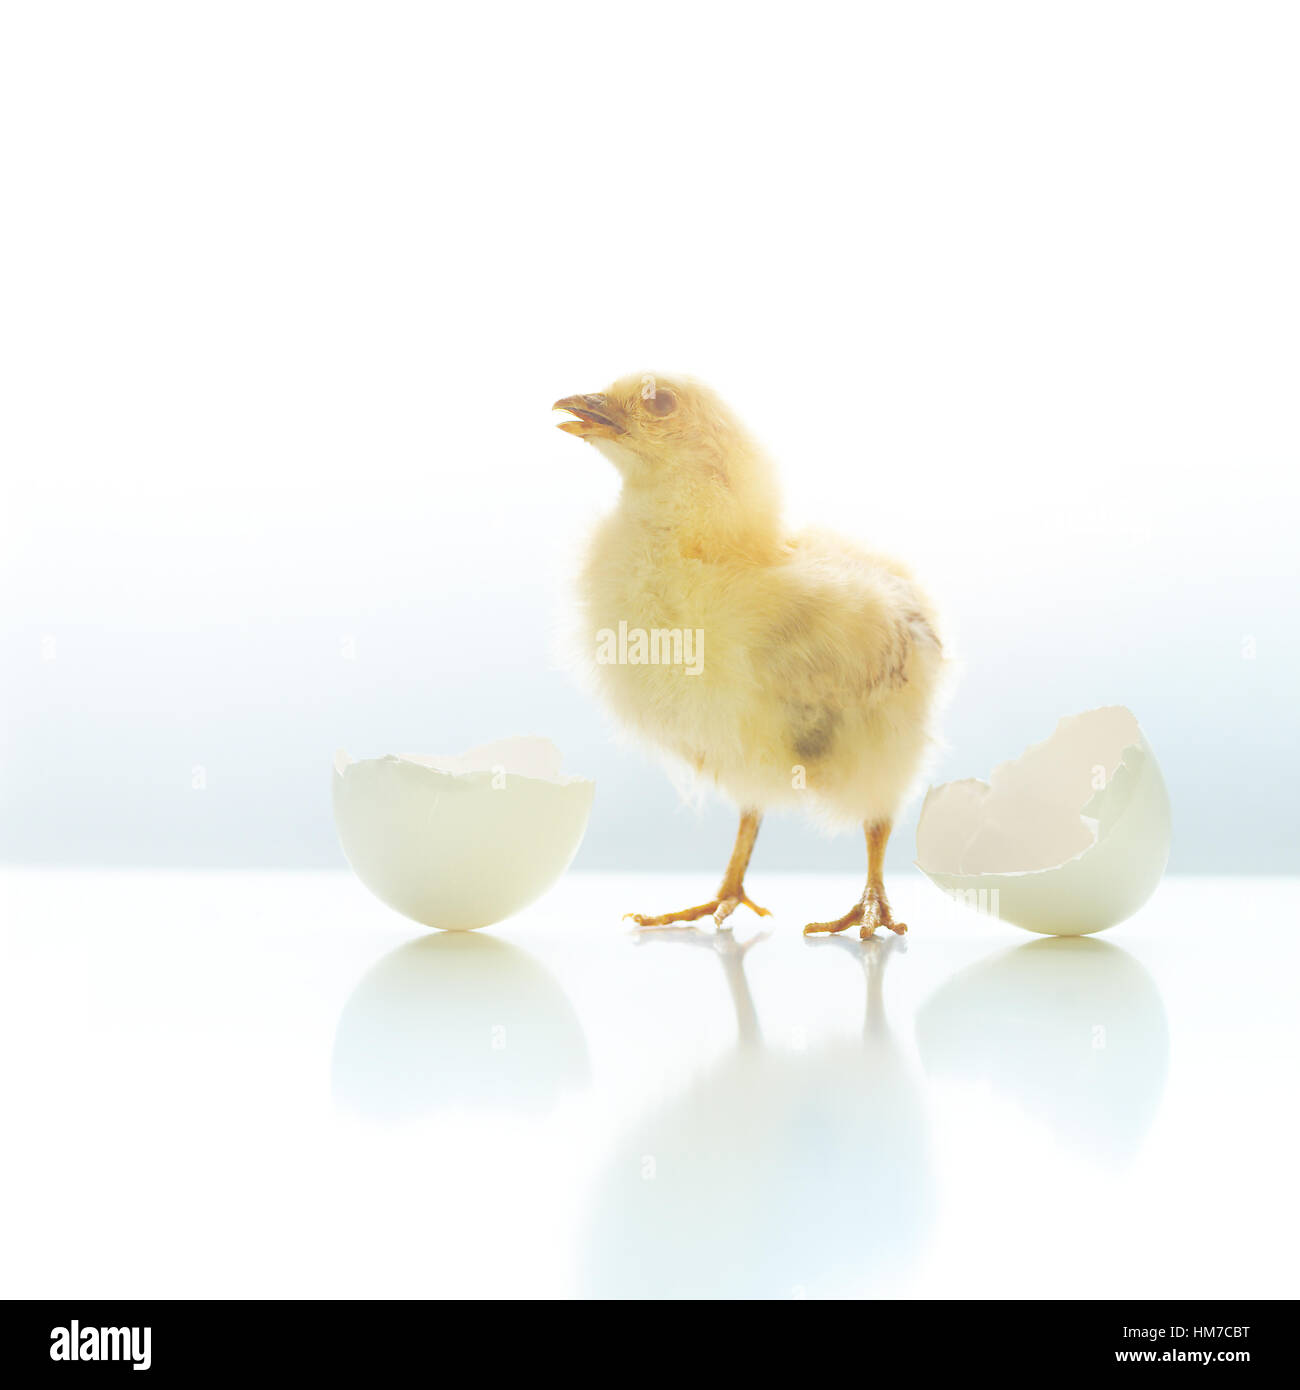 Newborn chicken and egg shell Stock Photo